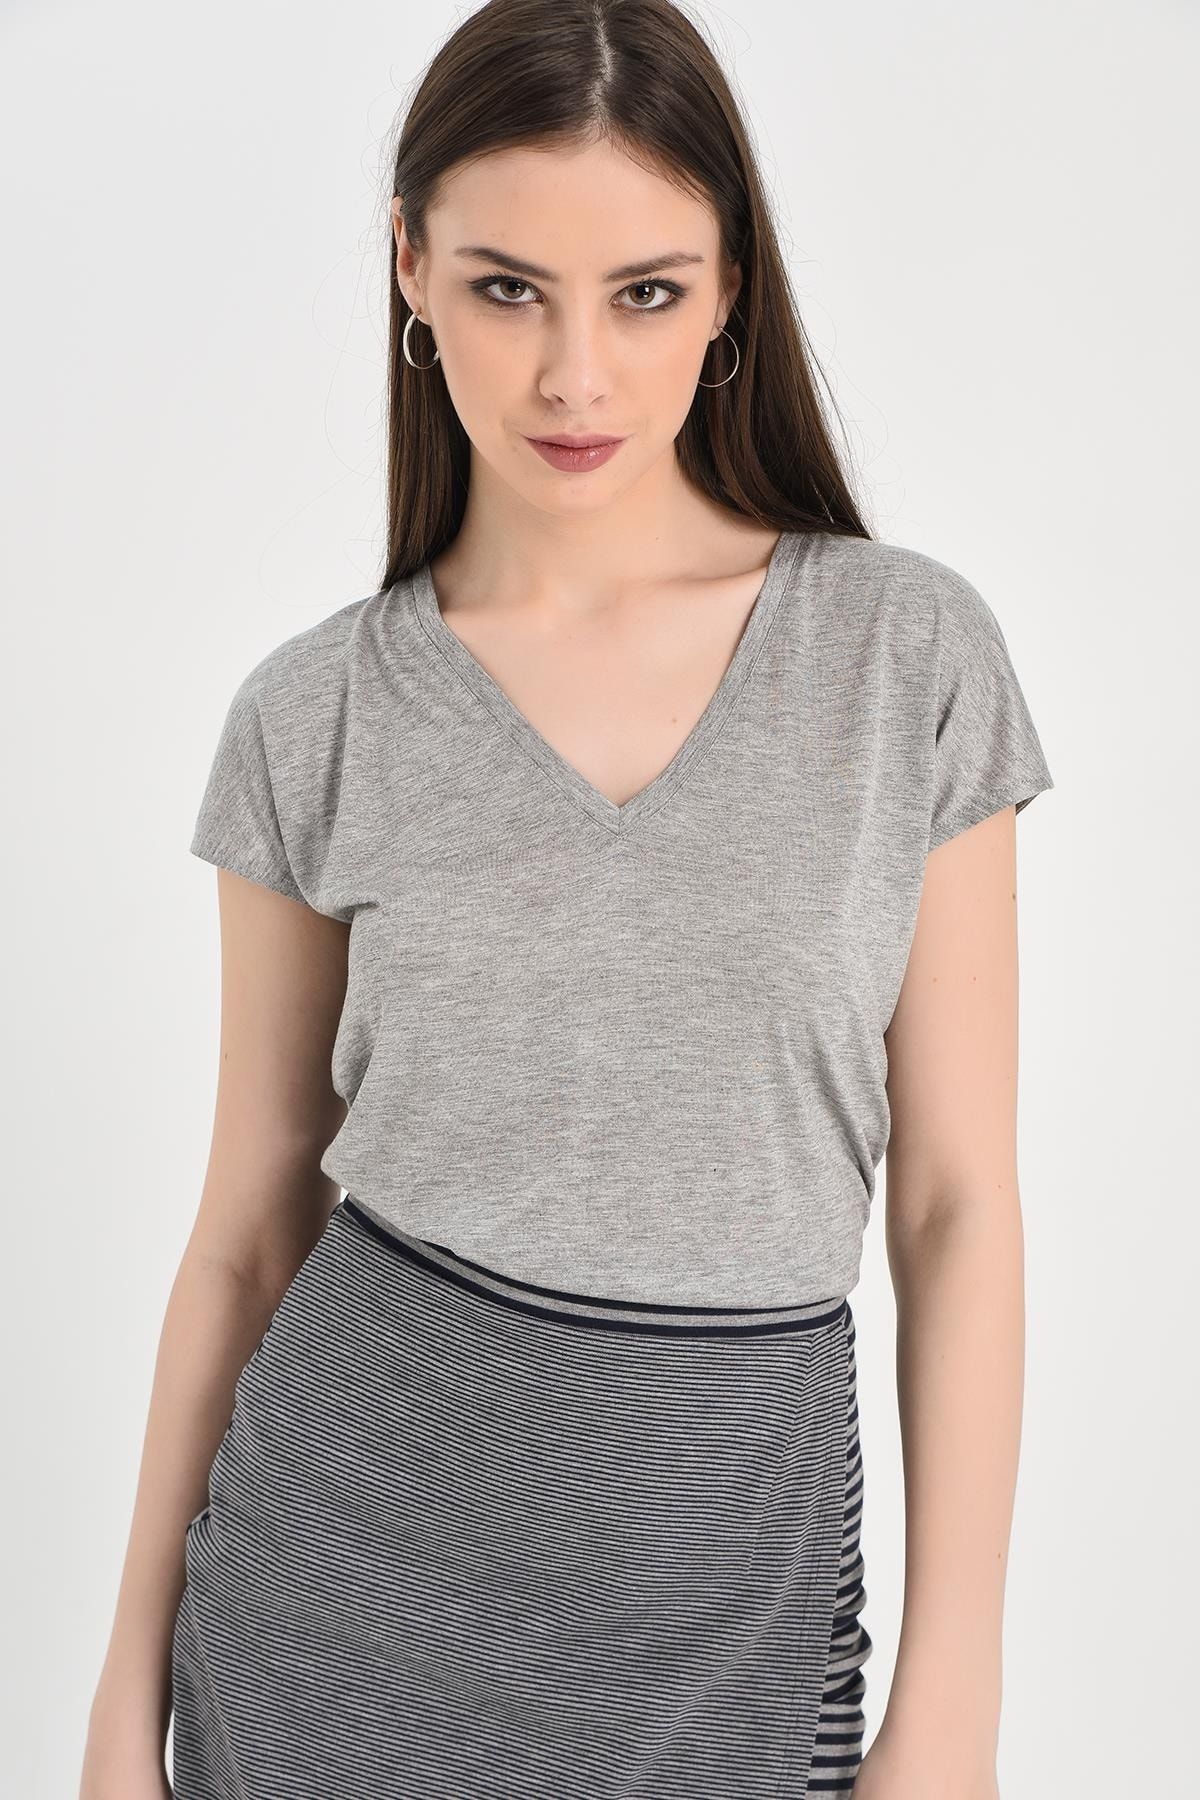 Hanna's Kadın V Yaka Gri Melanj Örme Kısa Kol Basic T-shirt